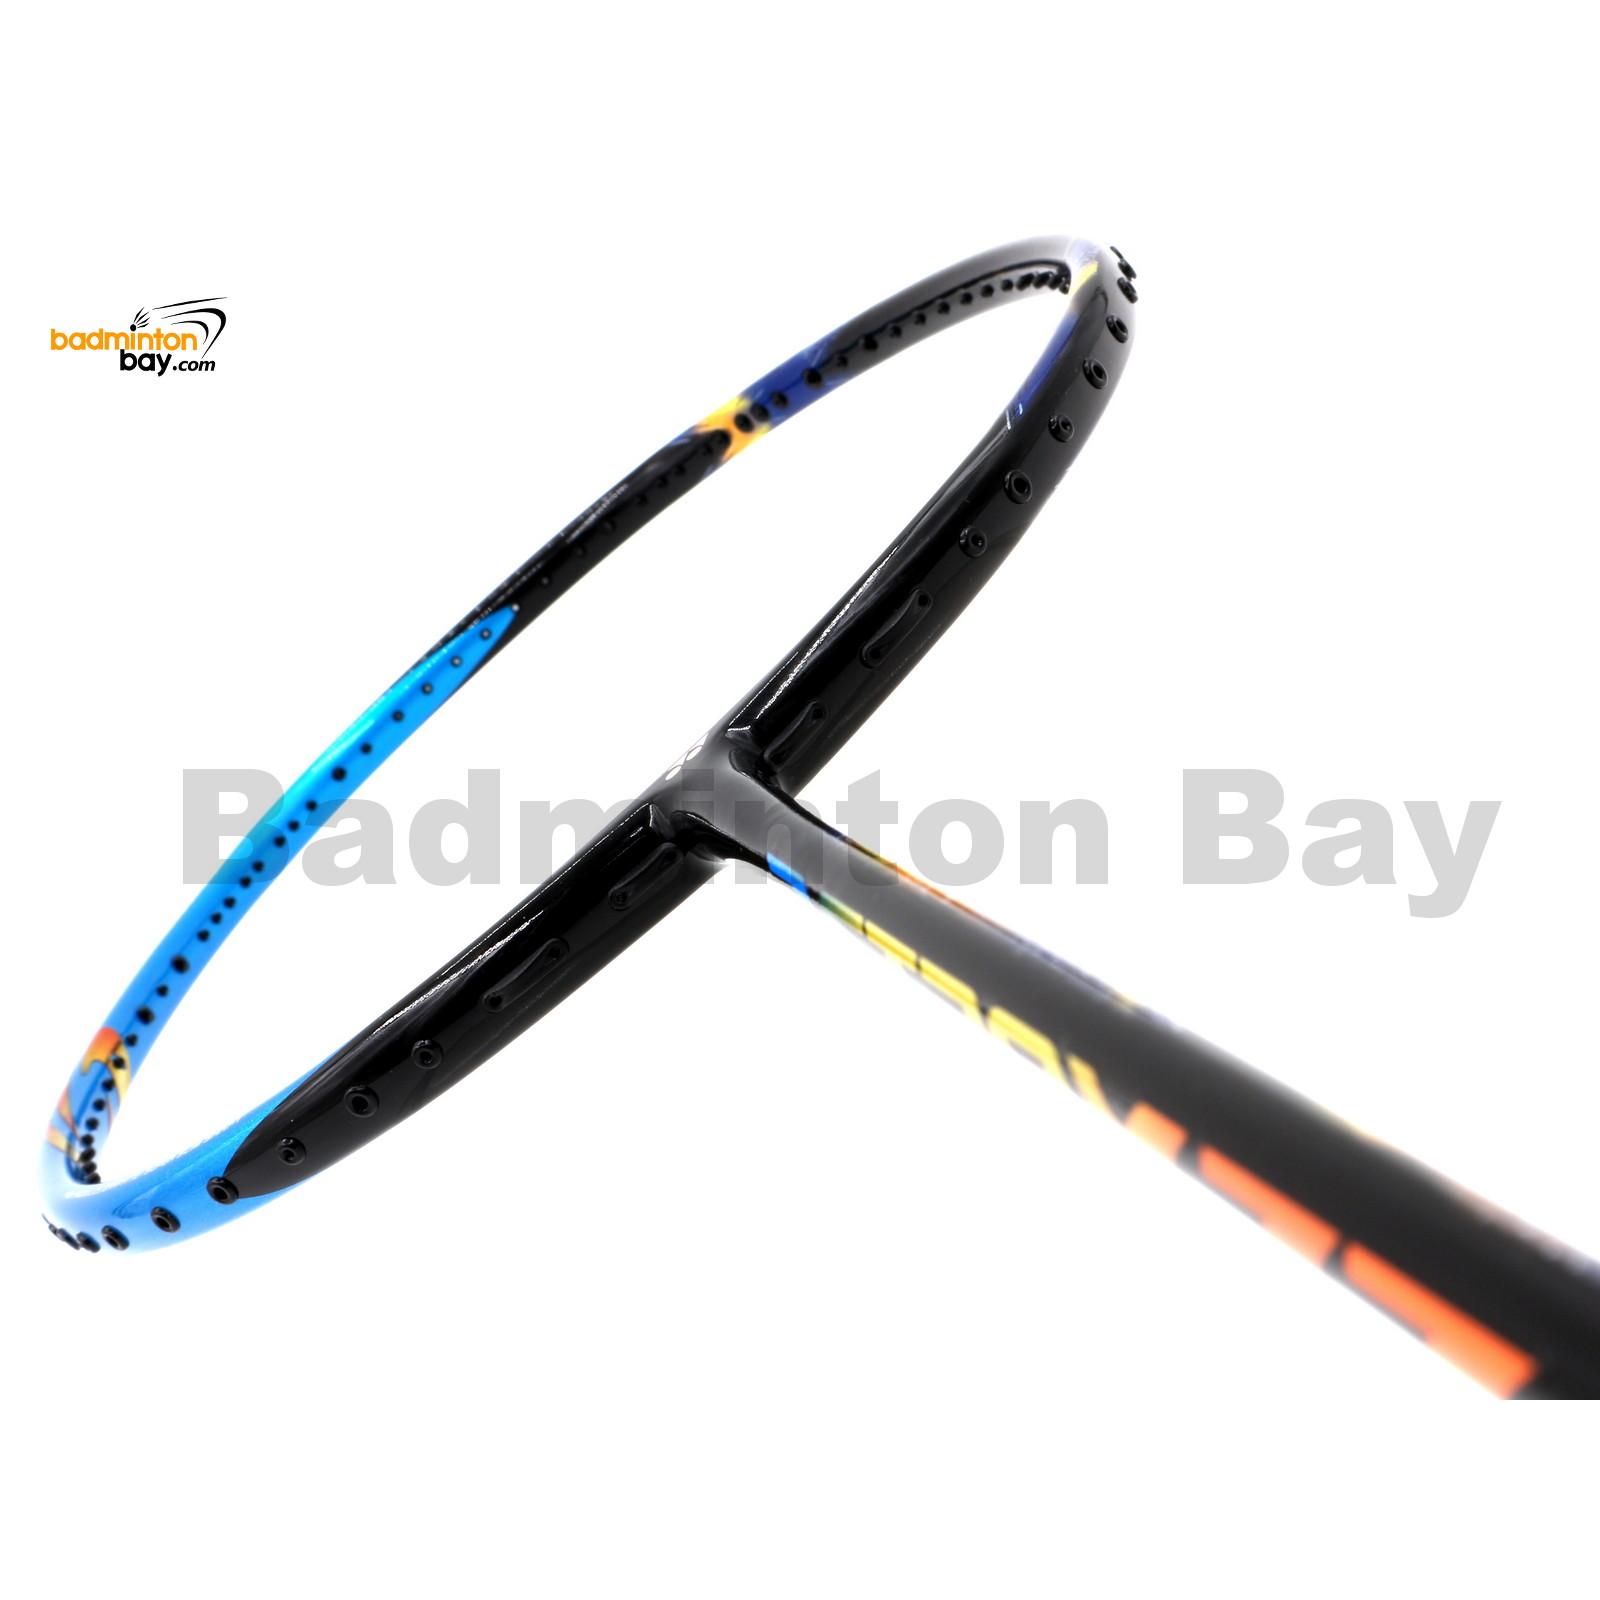 ASTROX 77 blue badminton racket pre-strung with overgrip AS77 badminton racket 